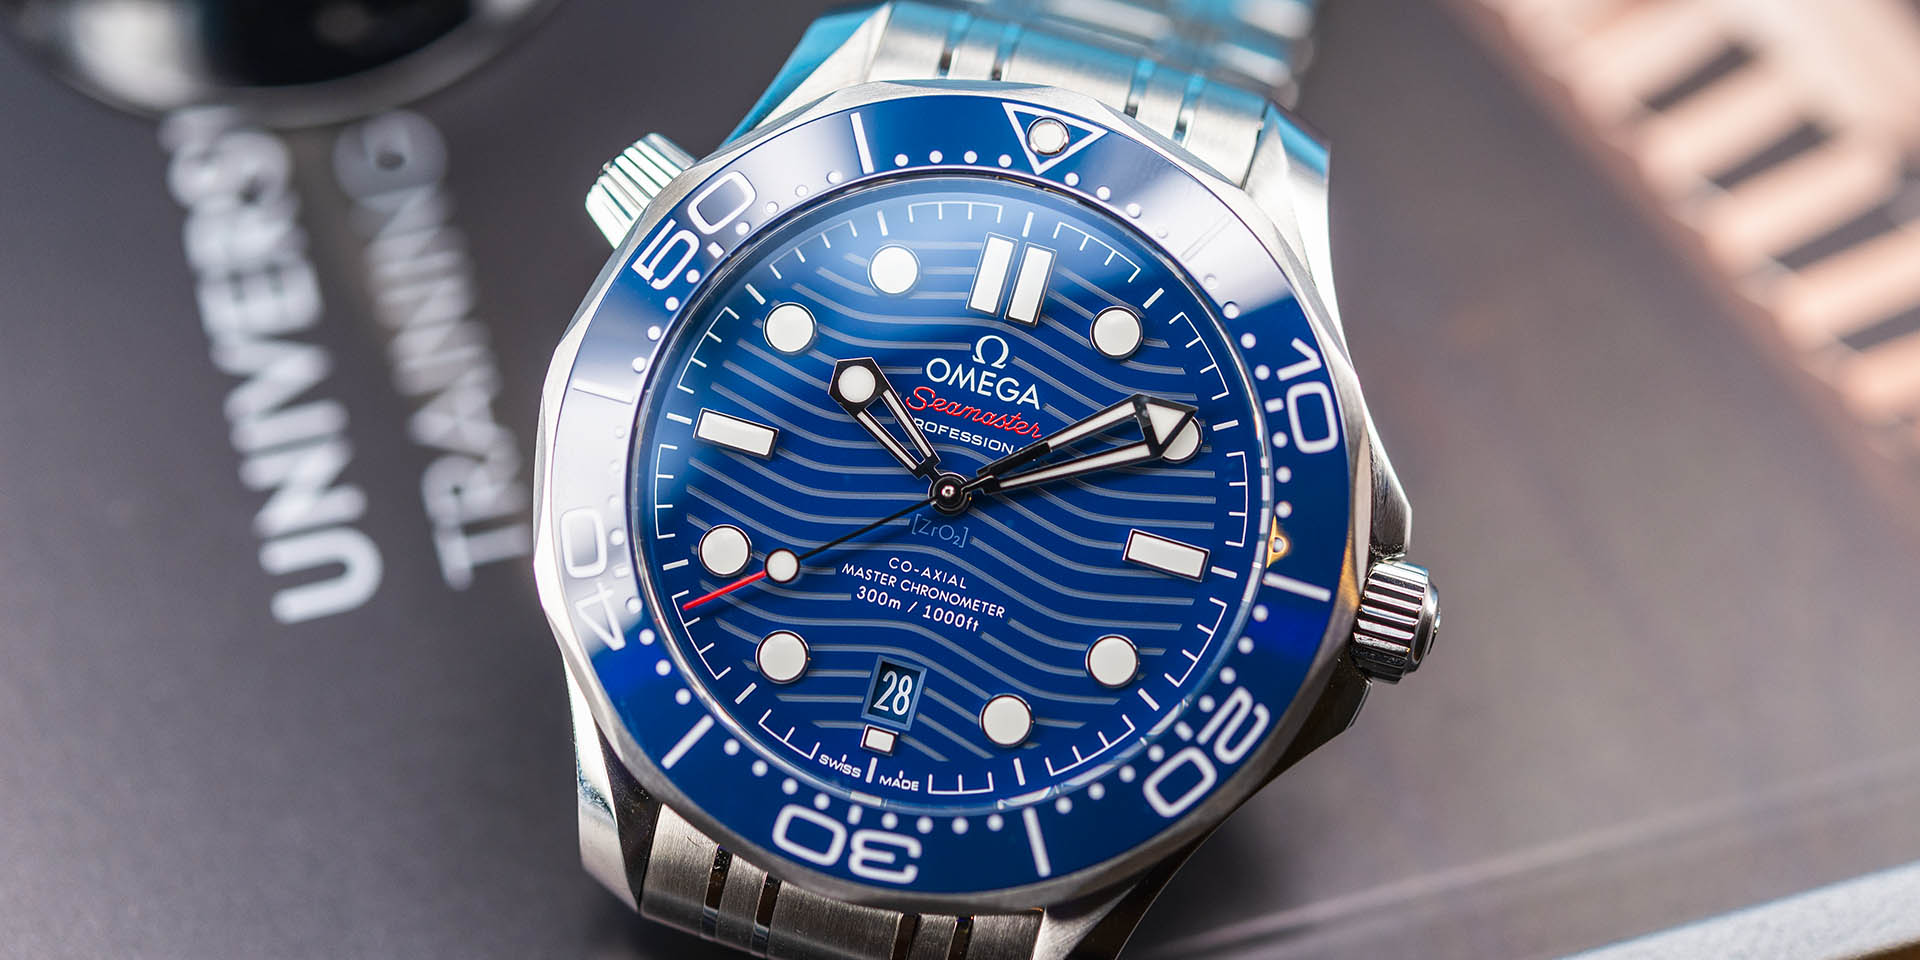 The waterproof copy watch has blue dial.